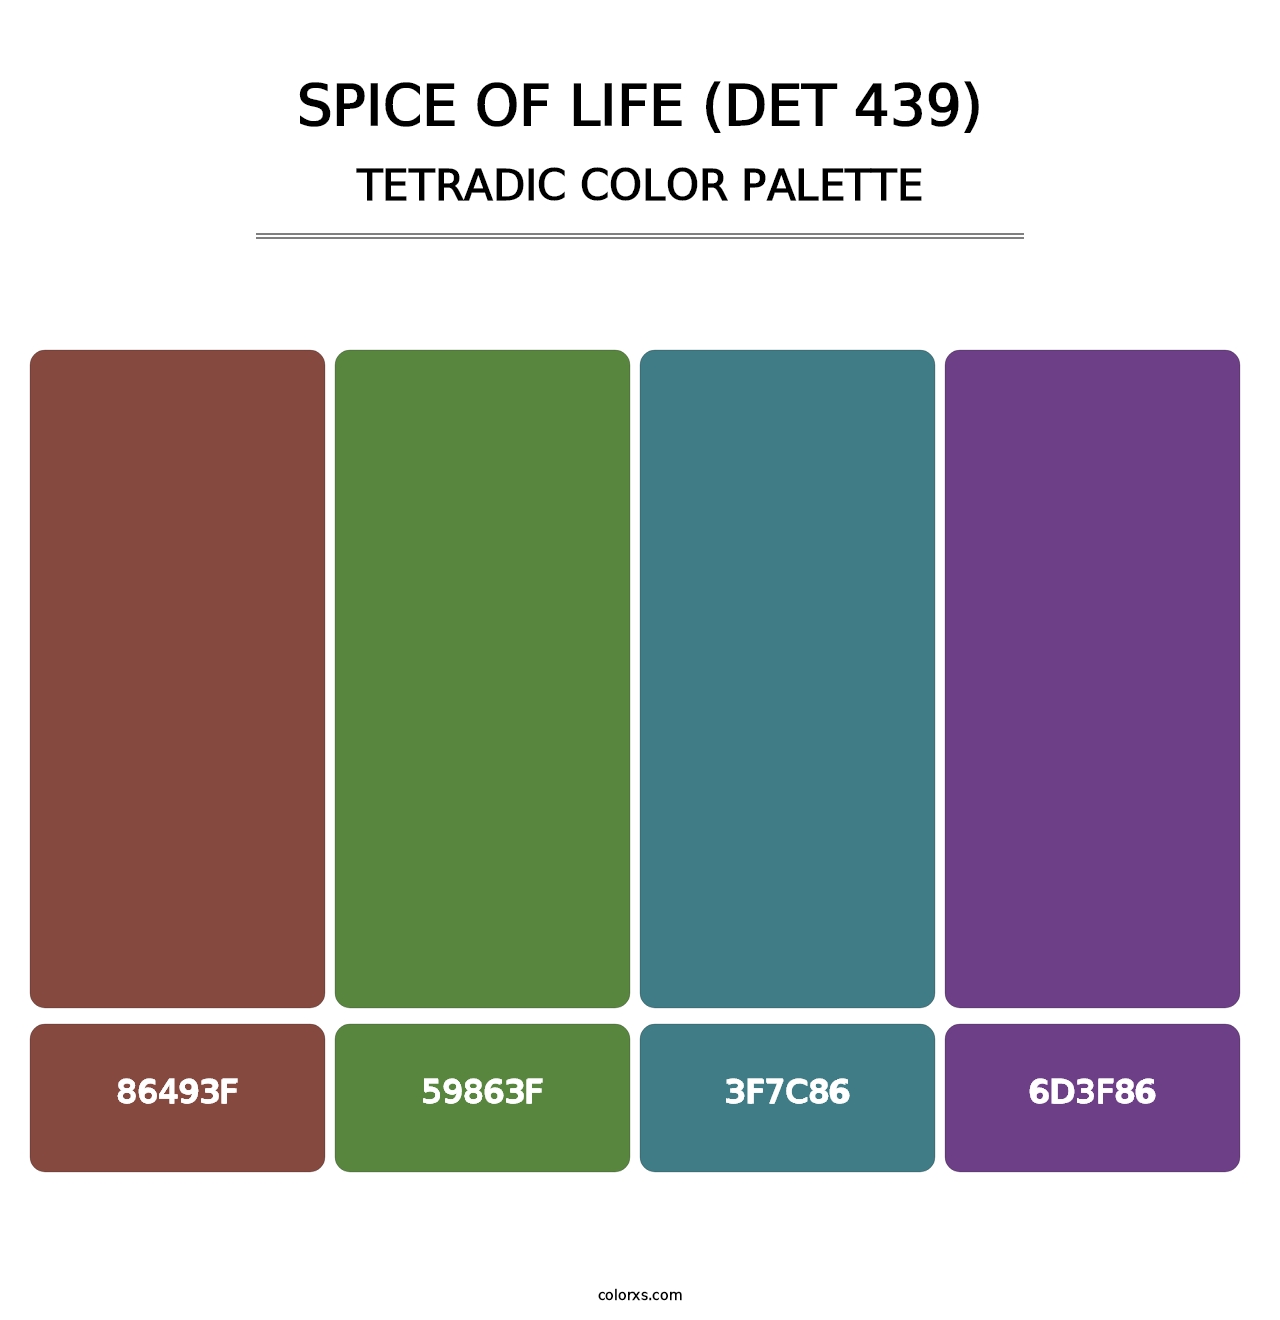 Spice of Life (DET 439) - Tetradic Color Palette